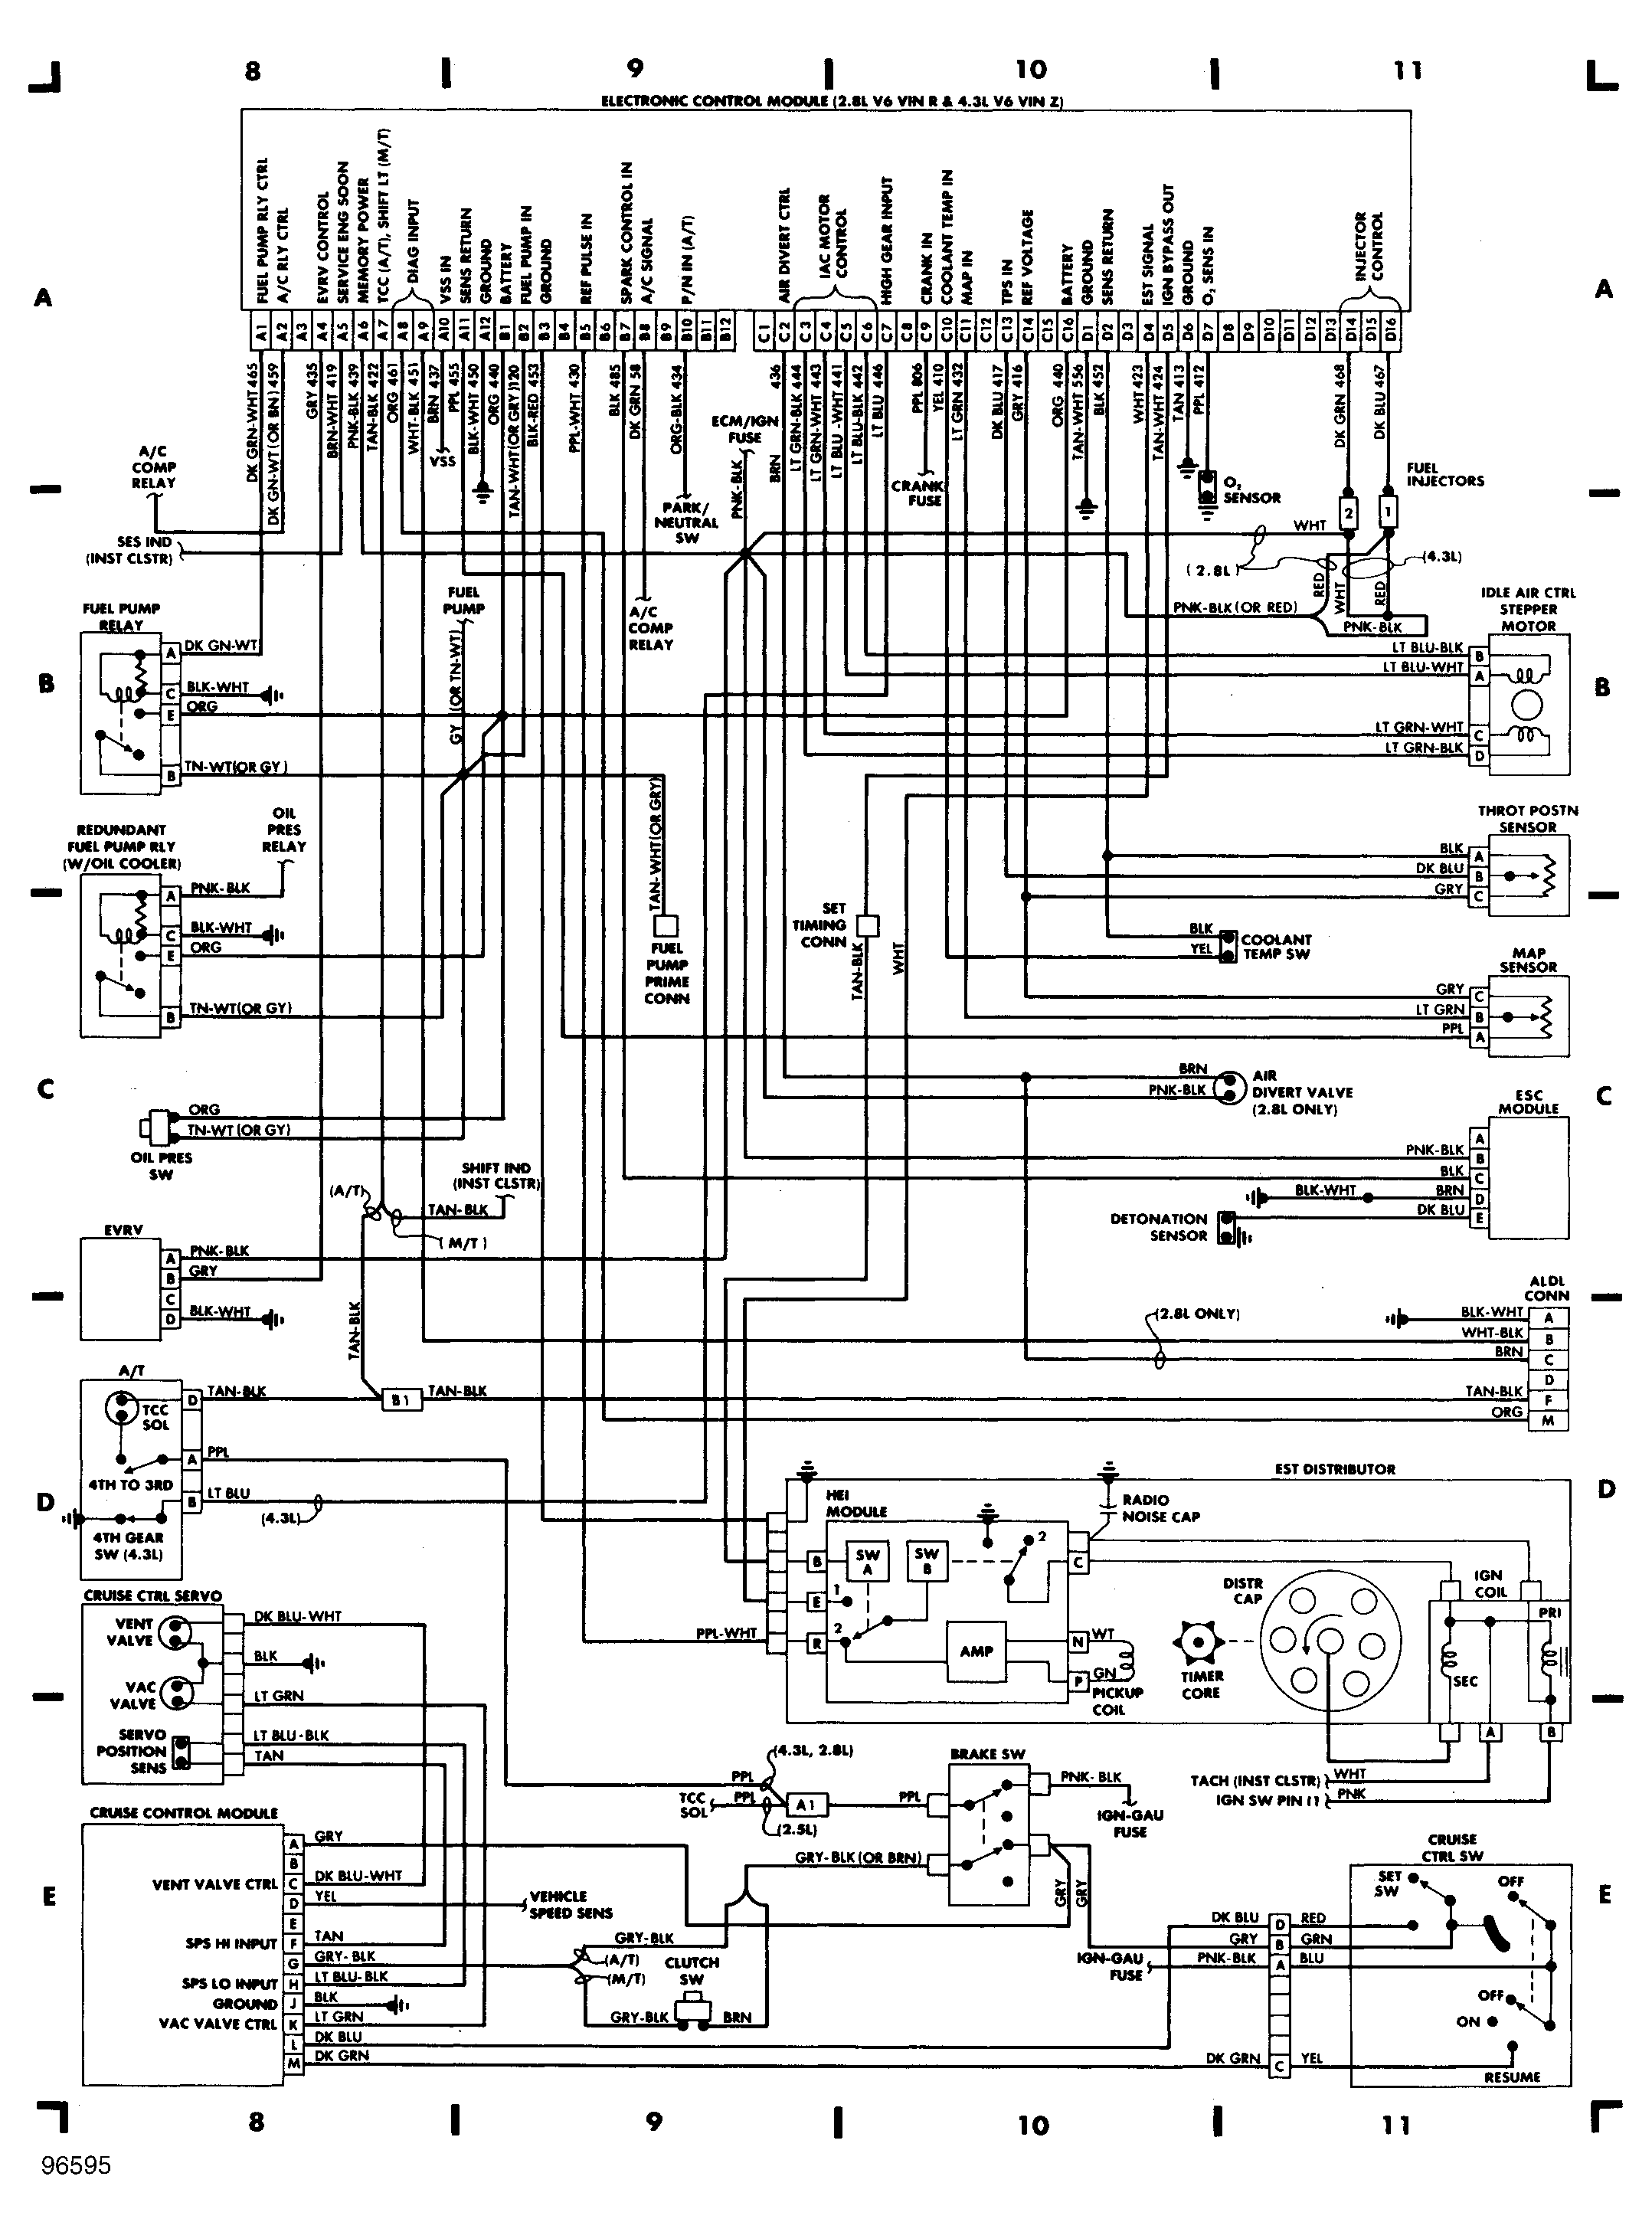 2001 blazer wiring diagram